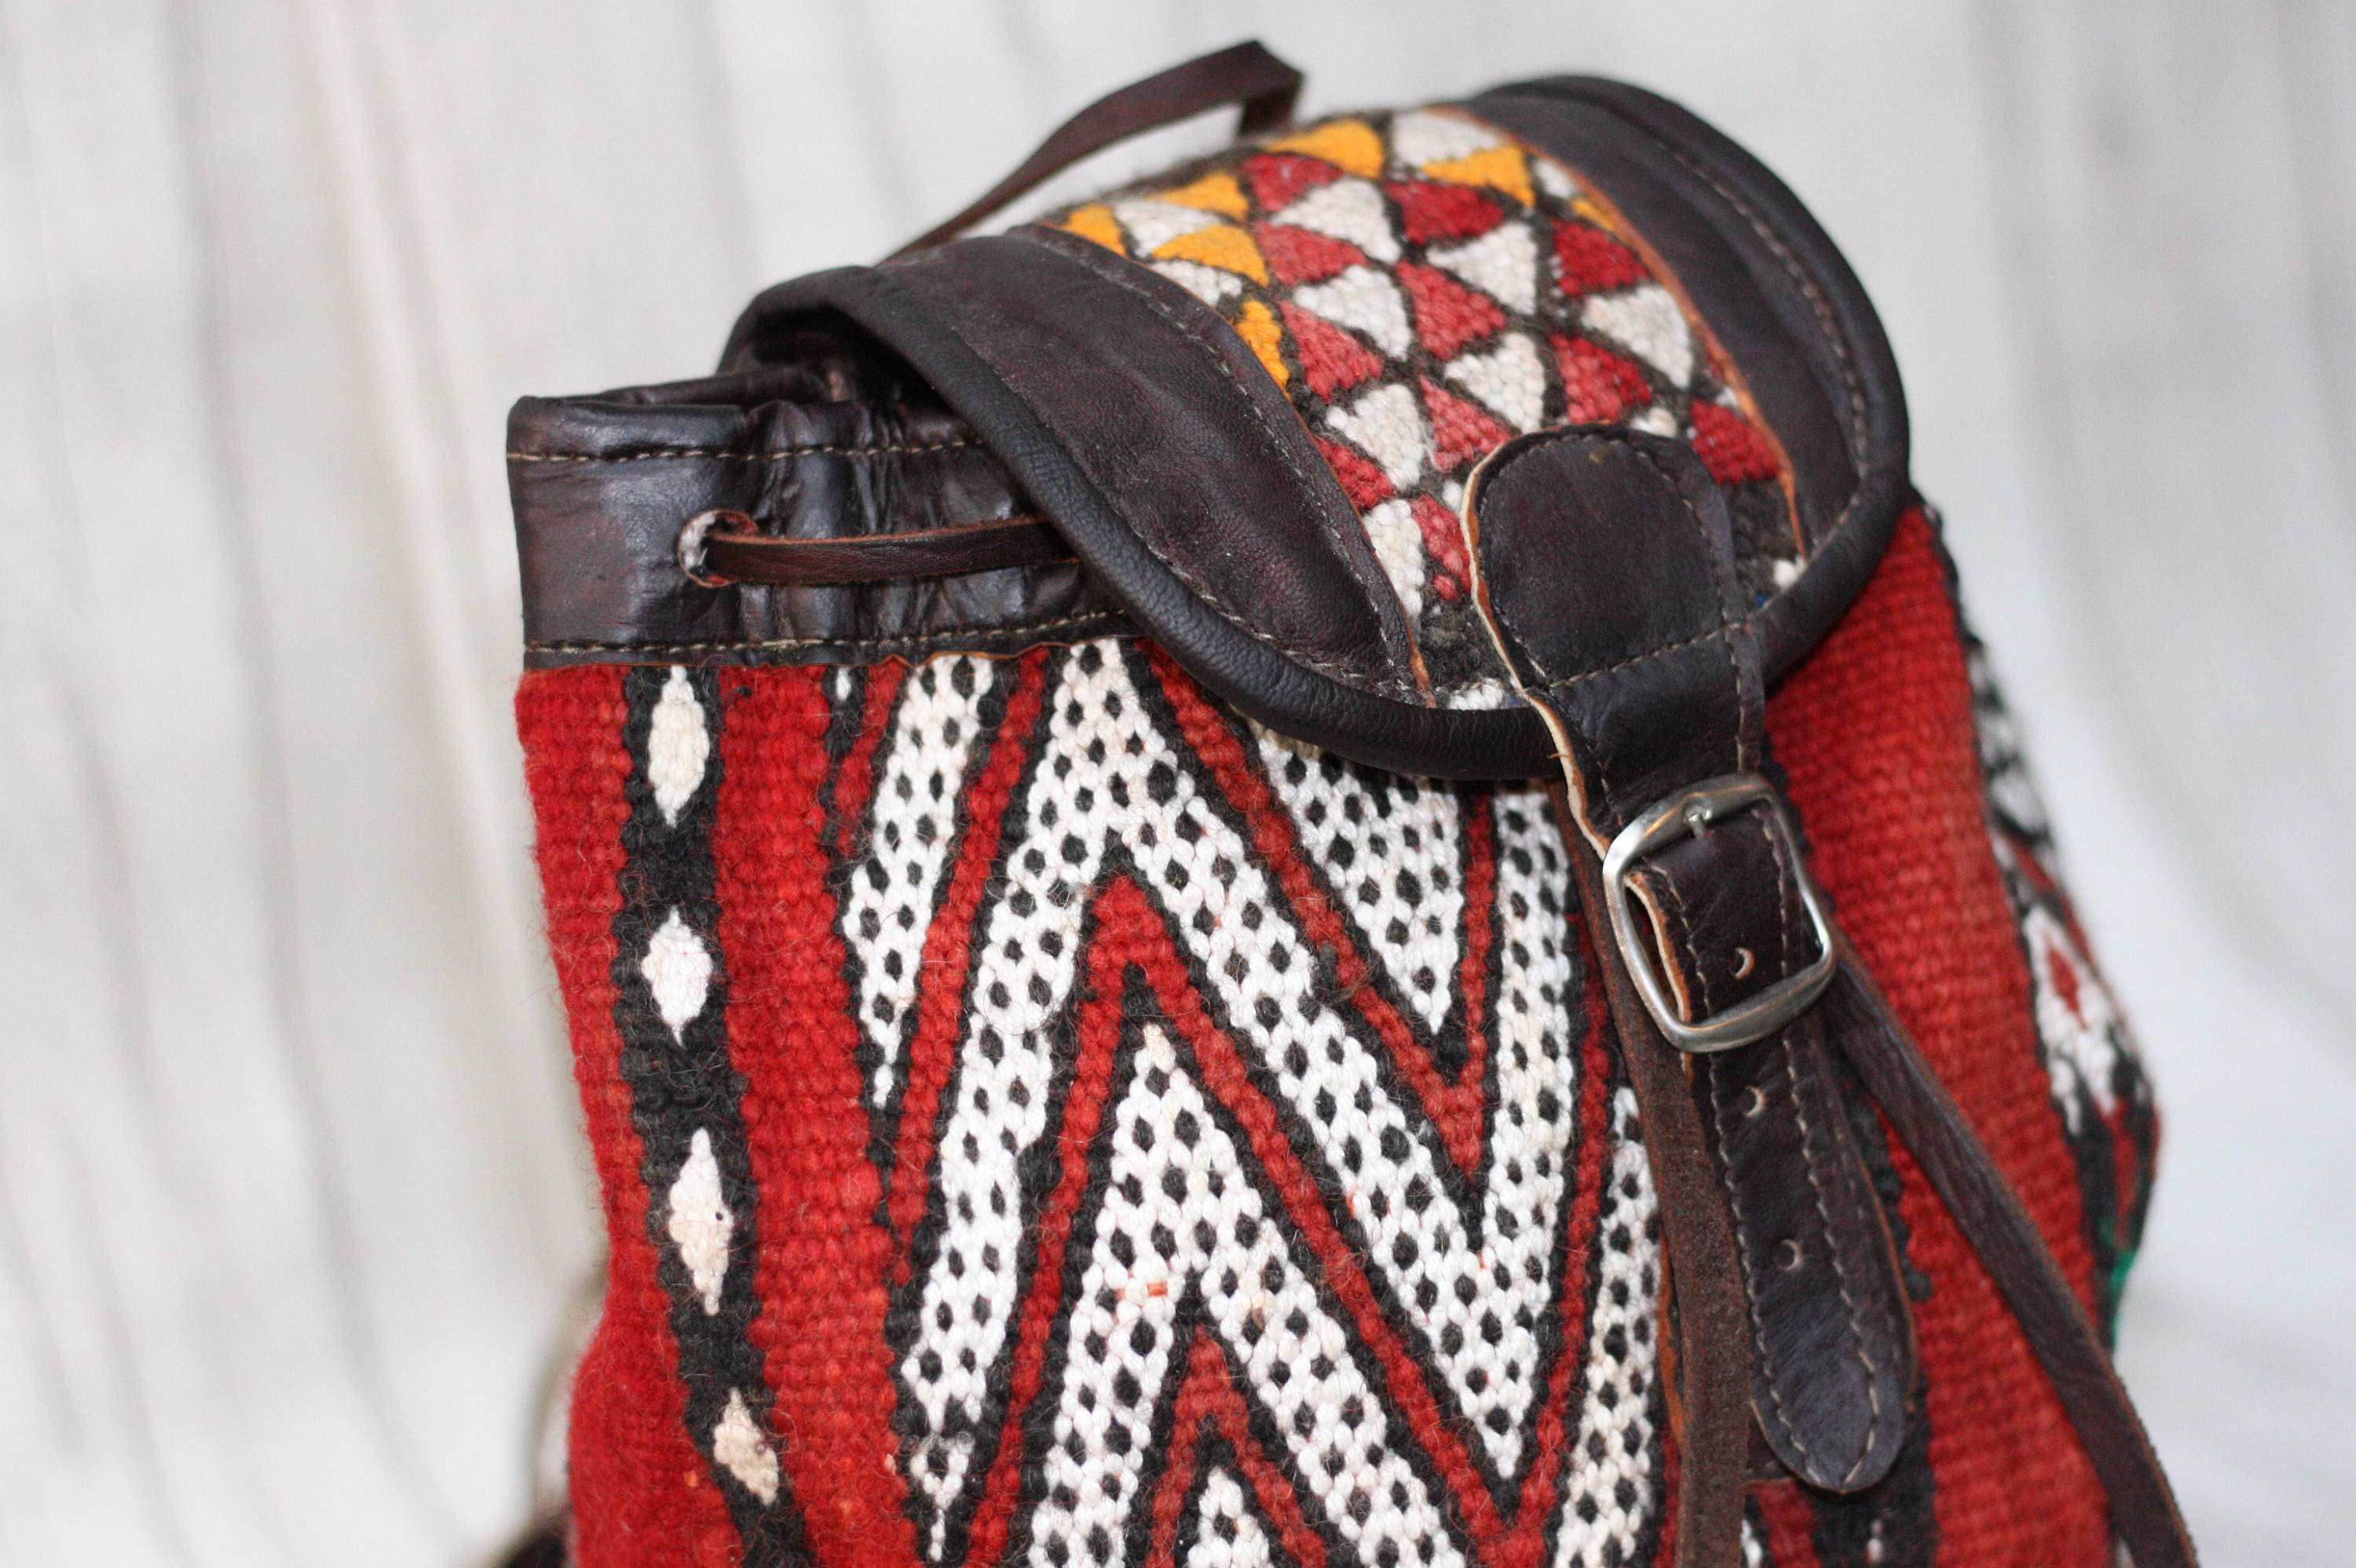 MINI CARPET BAG - Embroidered ethnic bag - Hippie rucksack - Boho ...